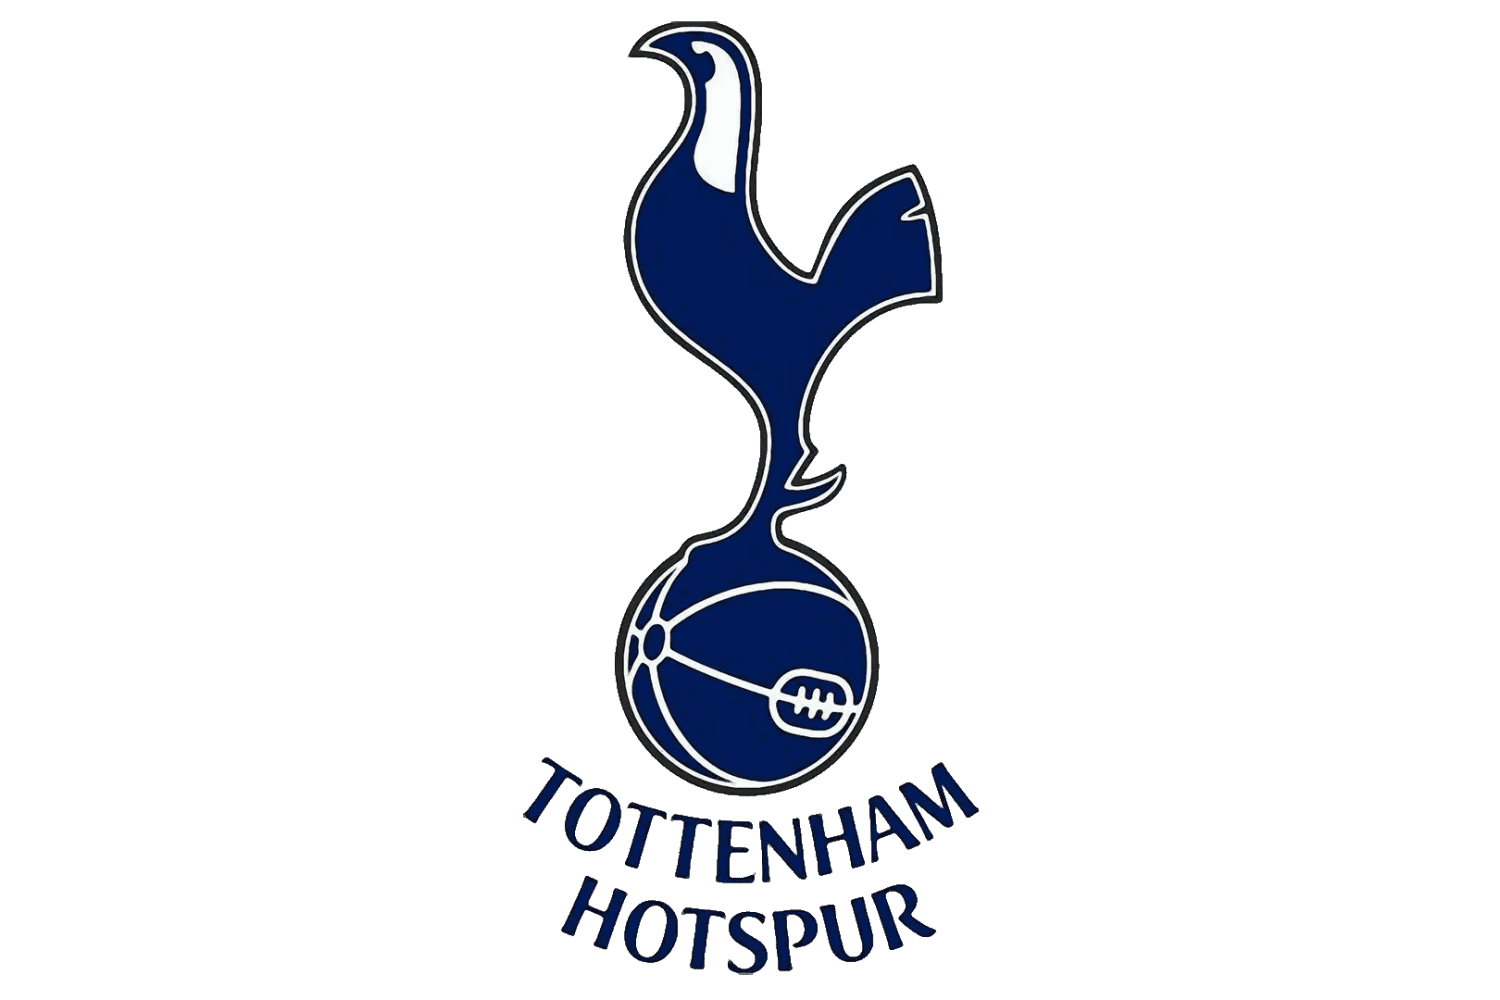 Tottenham Hotspur wyjazd i bilet